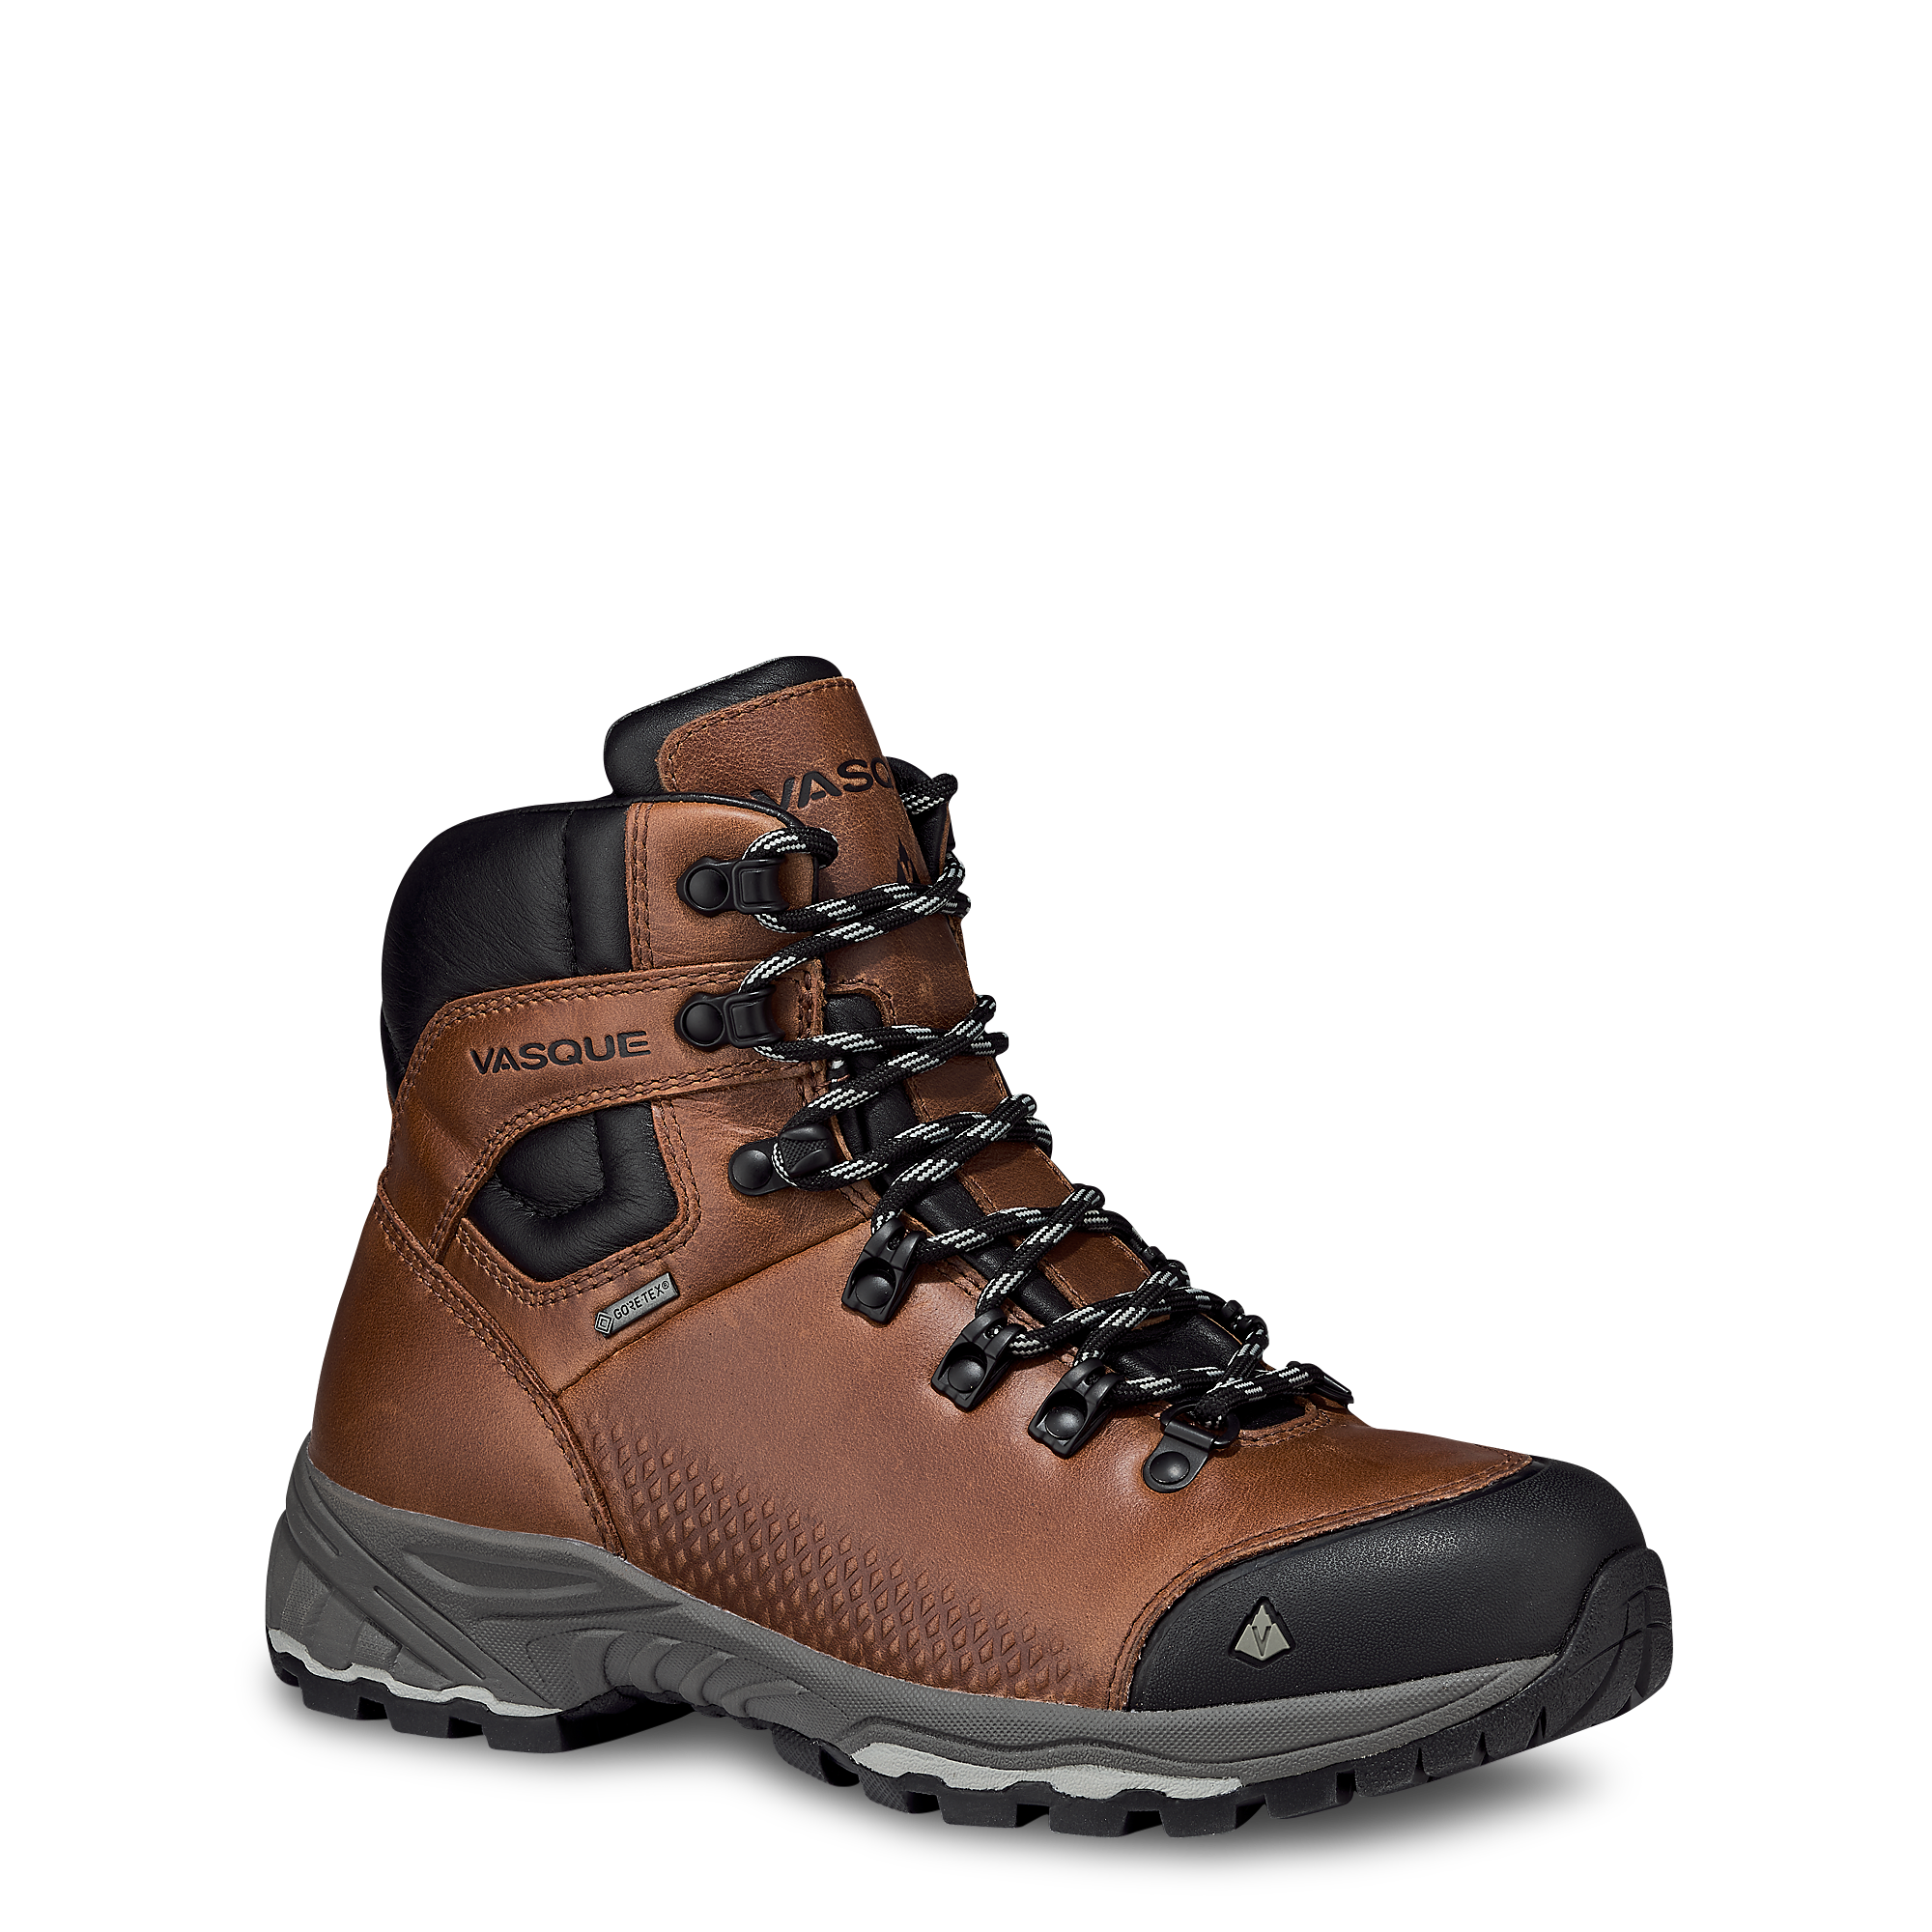 Vasque St. Elias FG GTX Waterproof Hiking Boots for Ladies